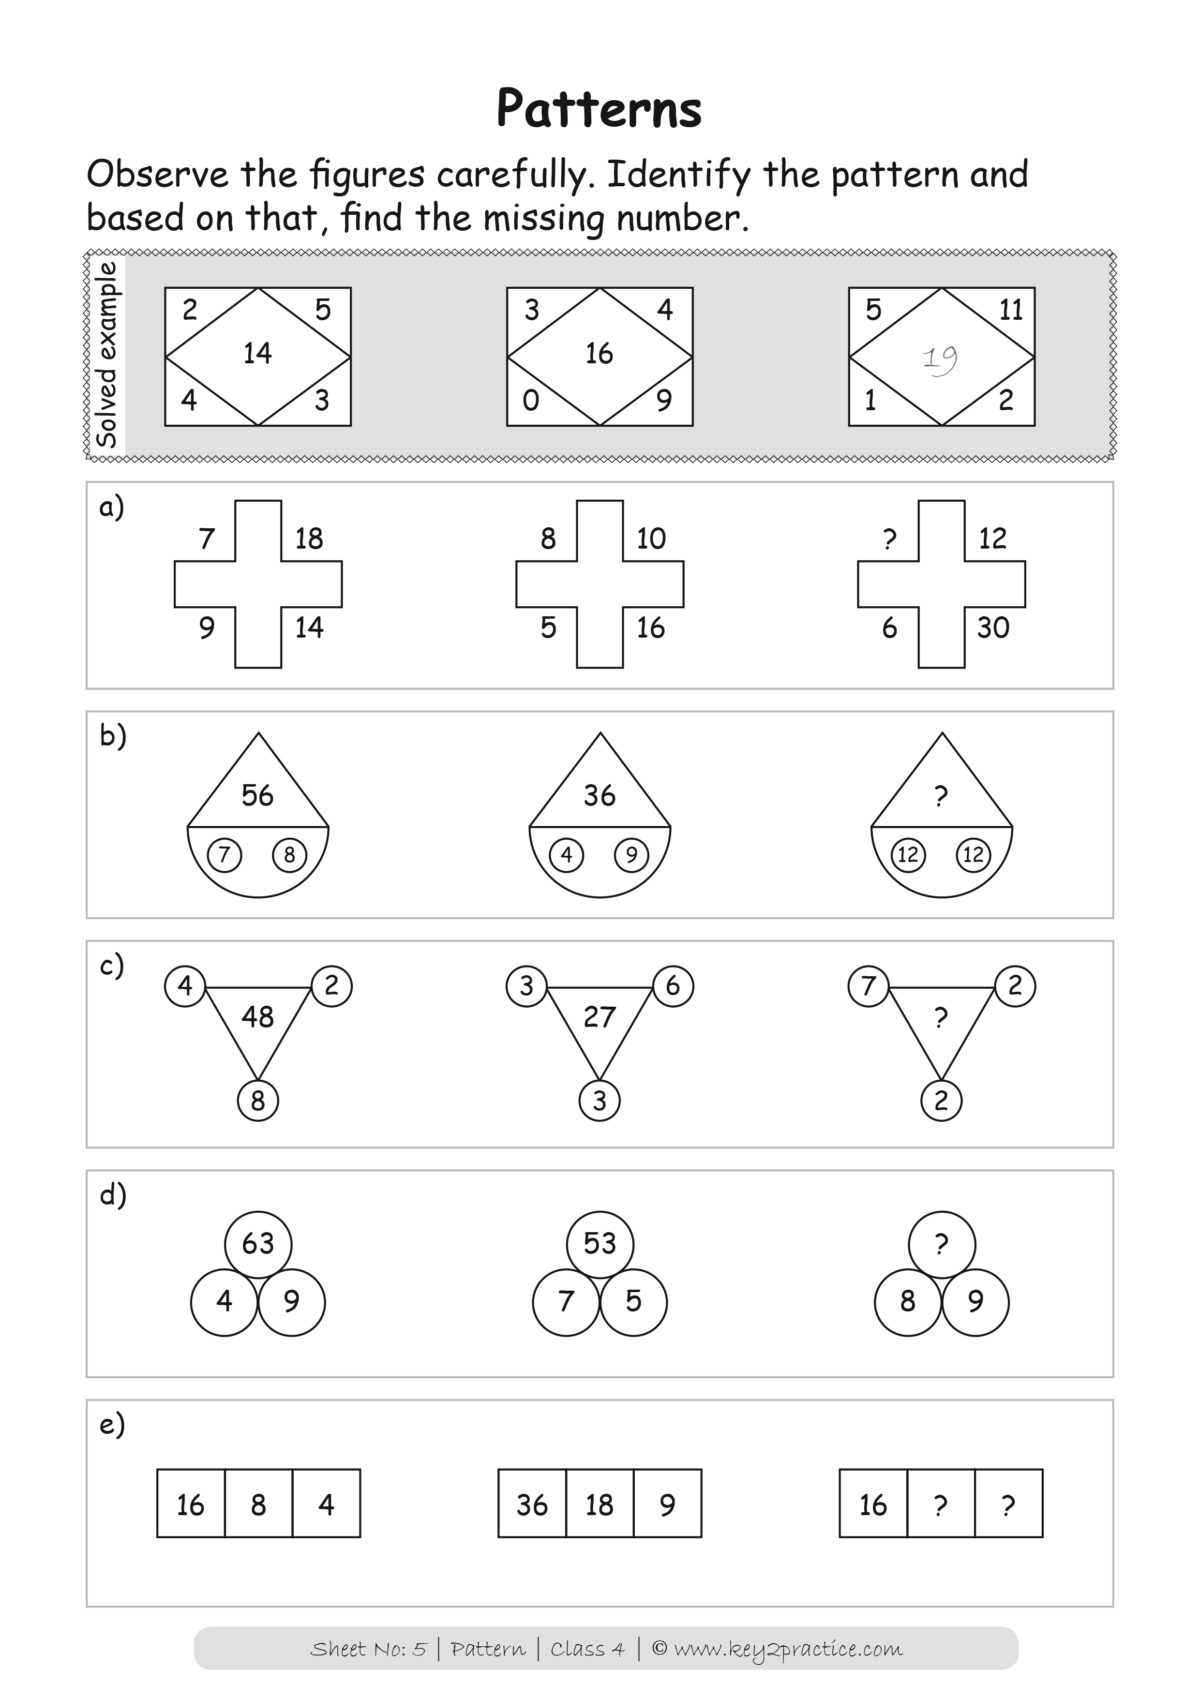 Patterns Worksheets Grade 4 I Maths Key2practice Workbooks